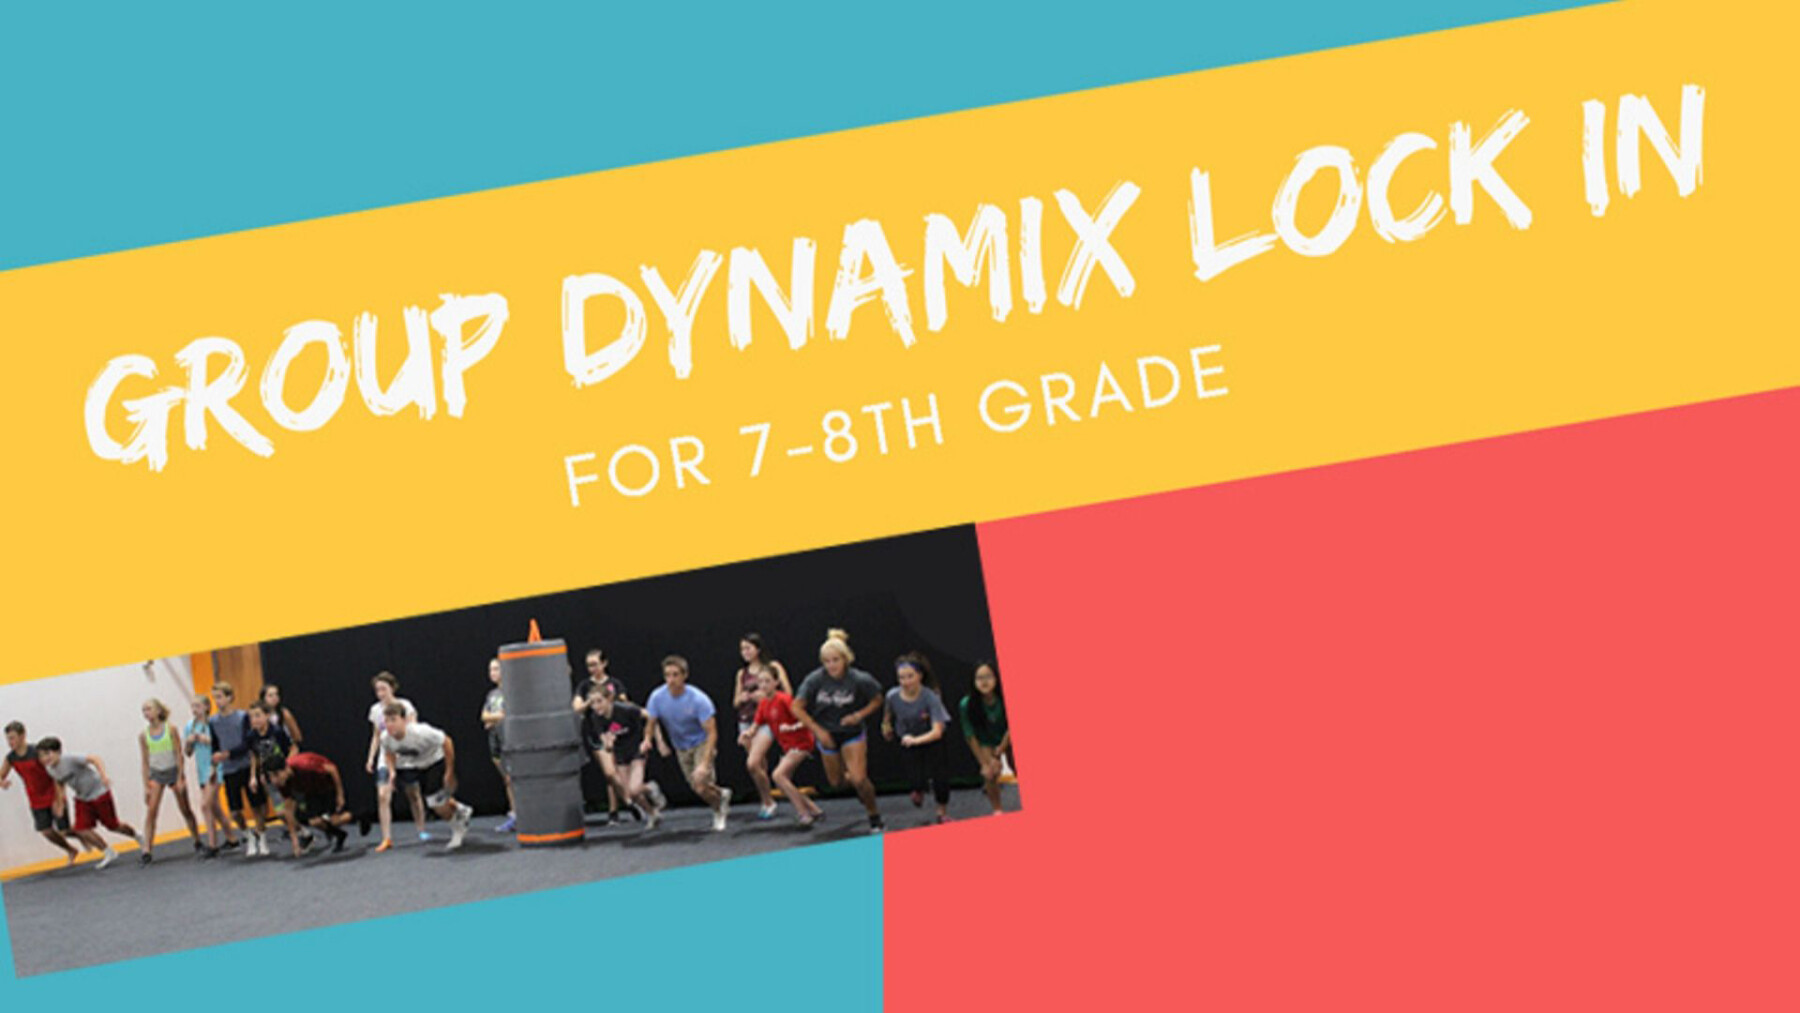 Crossroads - Group Dynamix Lockin